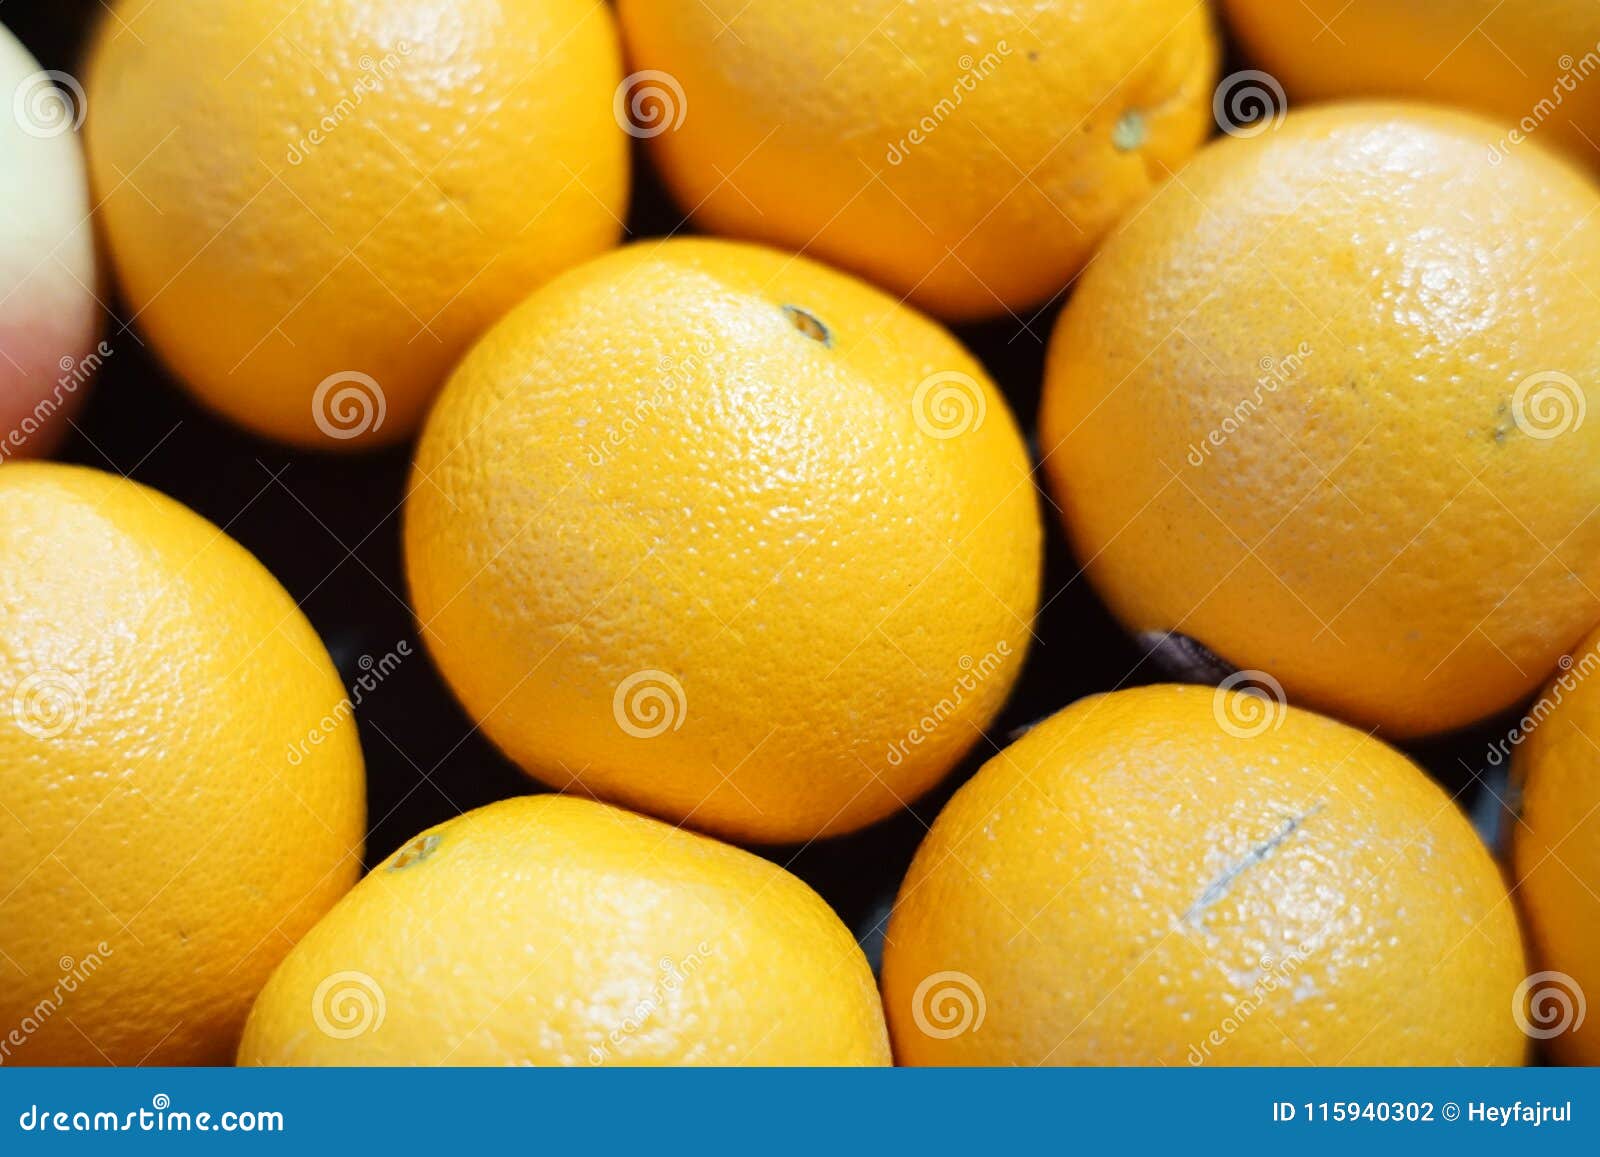 Group Of Fresh Orange Fruits Stock Photo Image Of Fresh Details 115940302,Best Kitchen Appliances Brand 2020